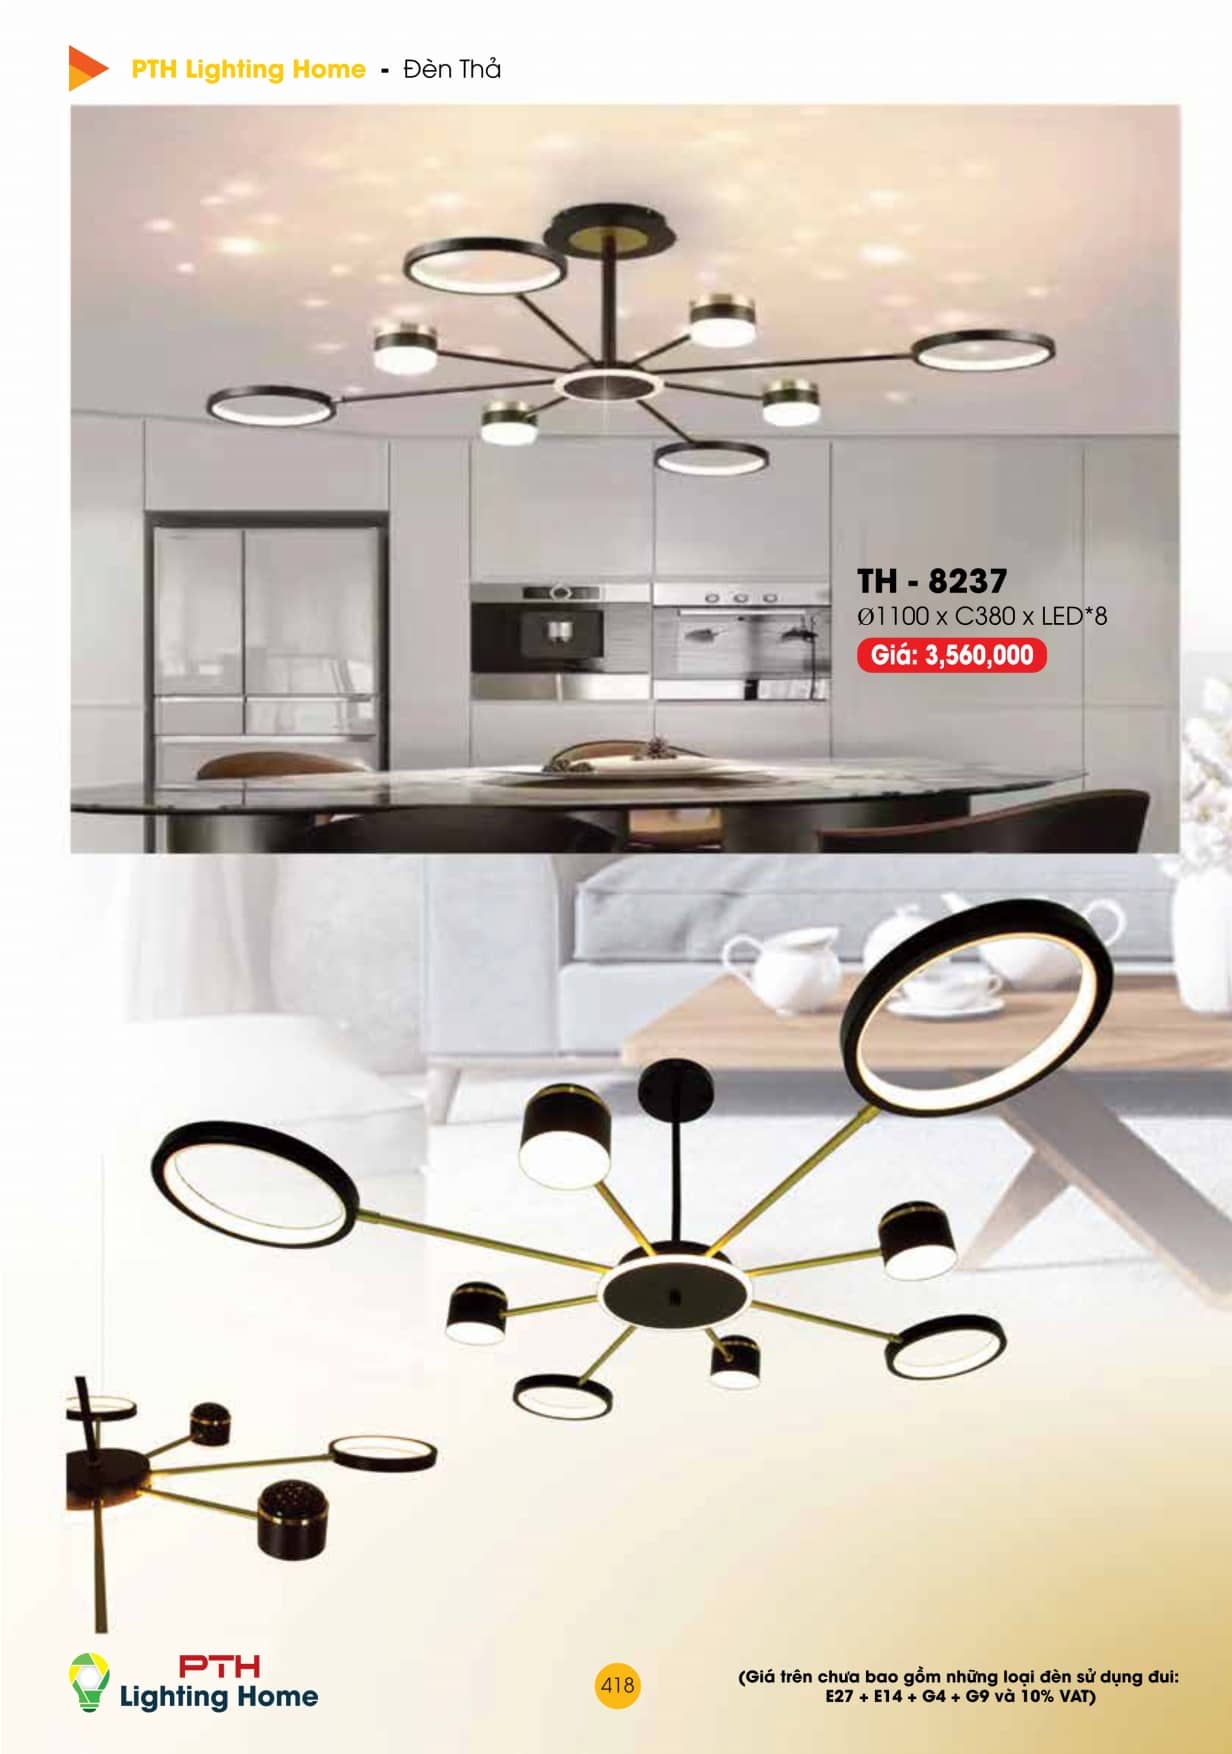 catalogue-bang-gia-den-led-trang-tri-pth-lighting-home-420